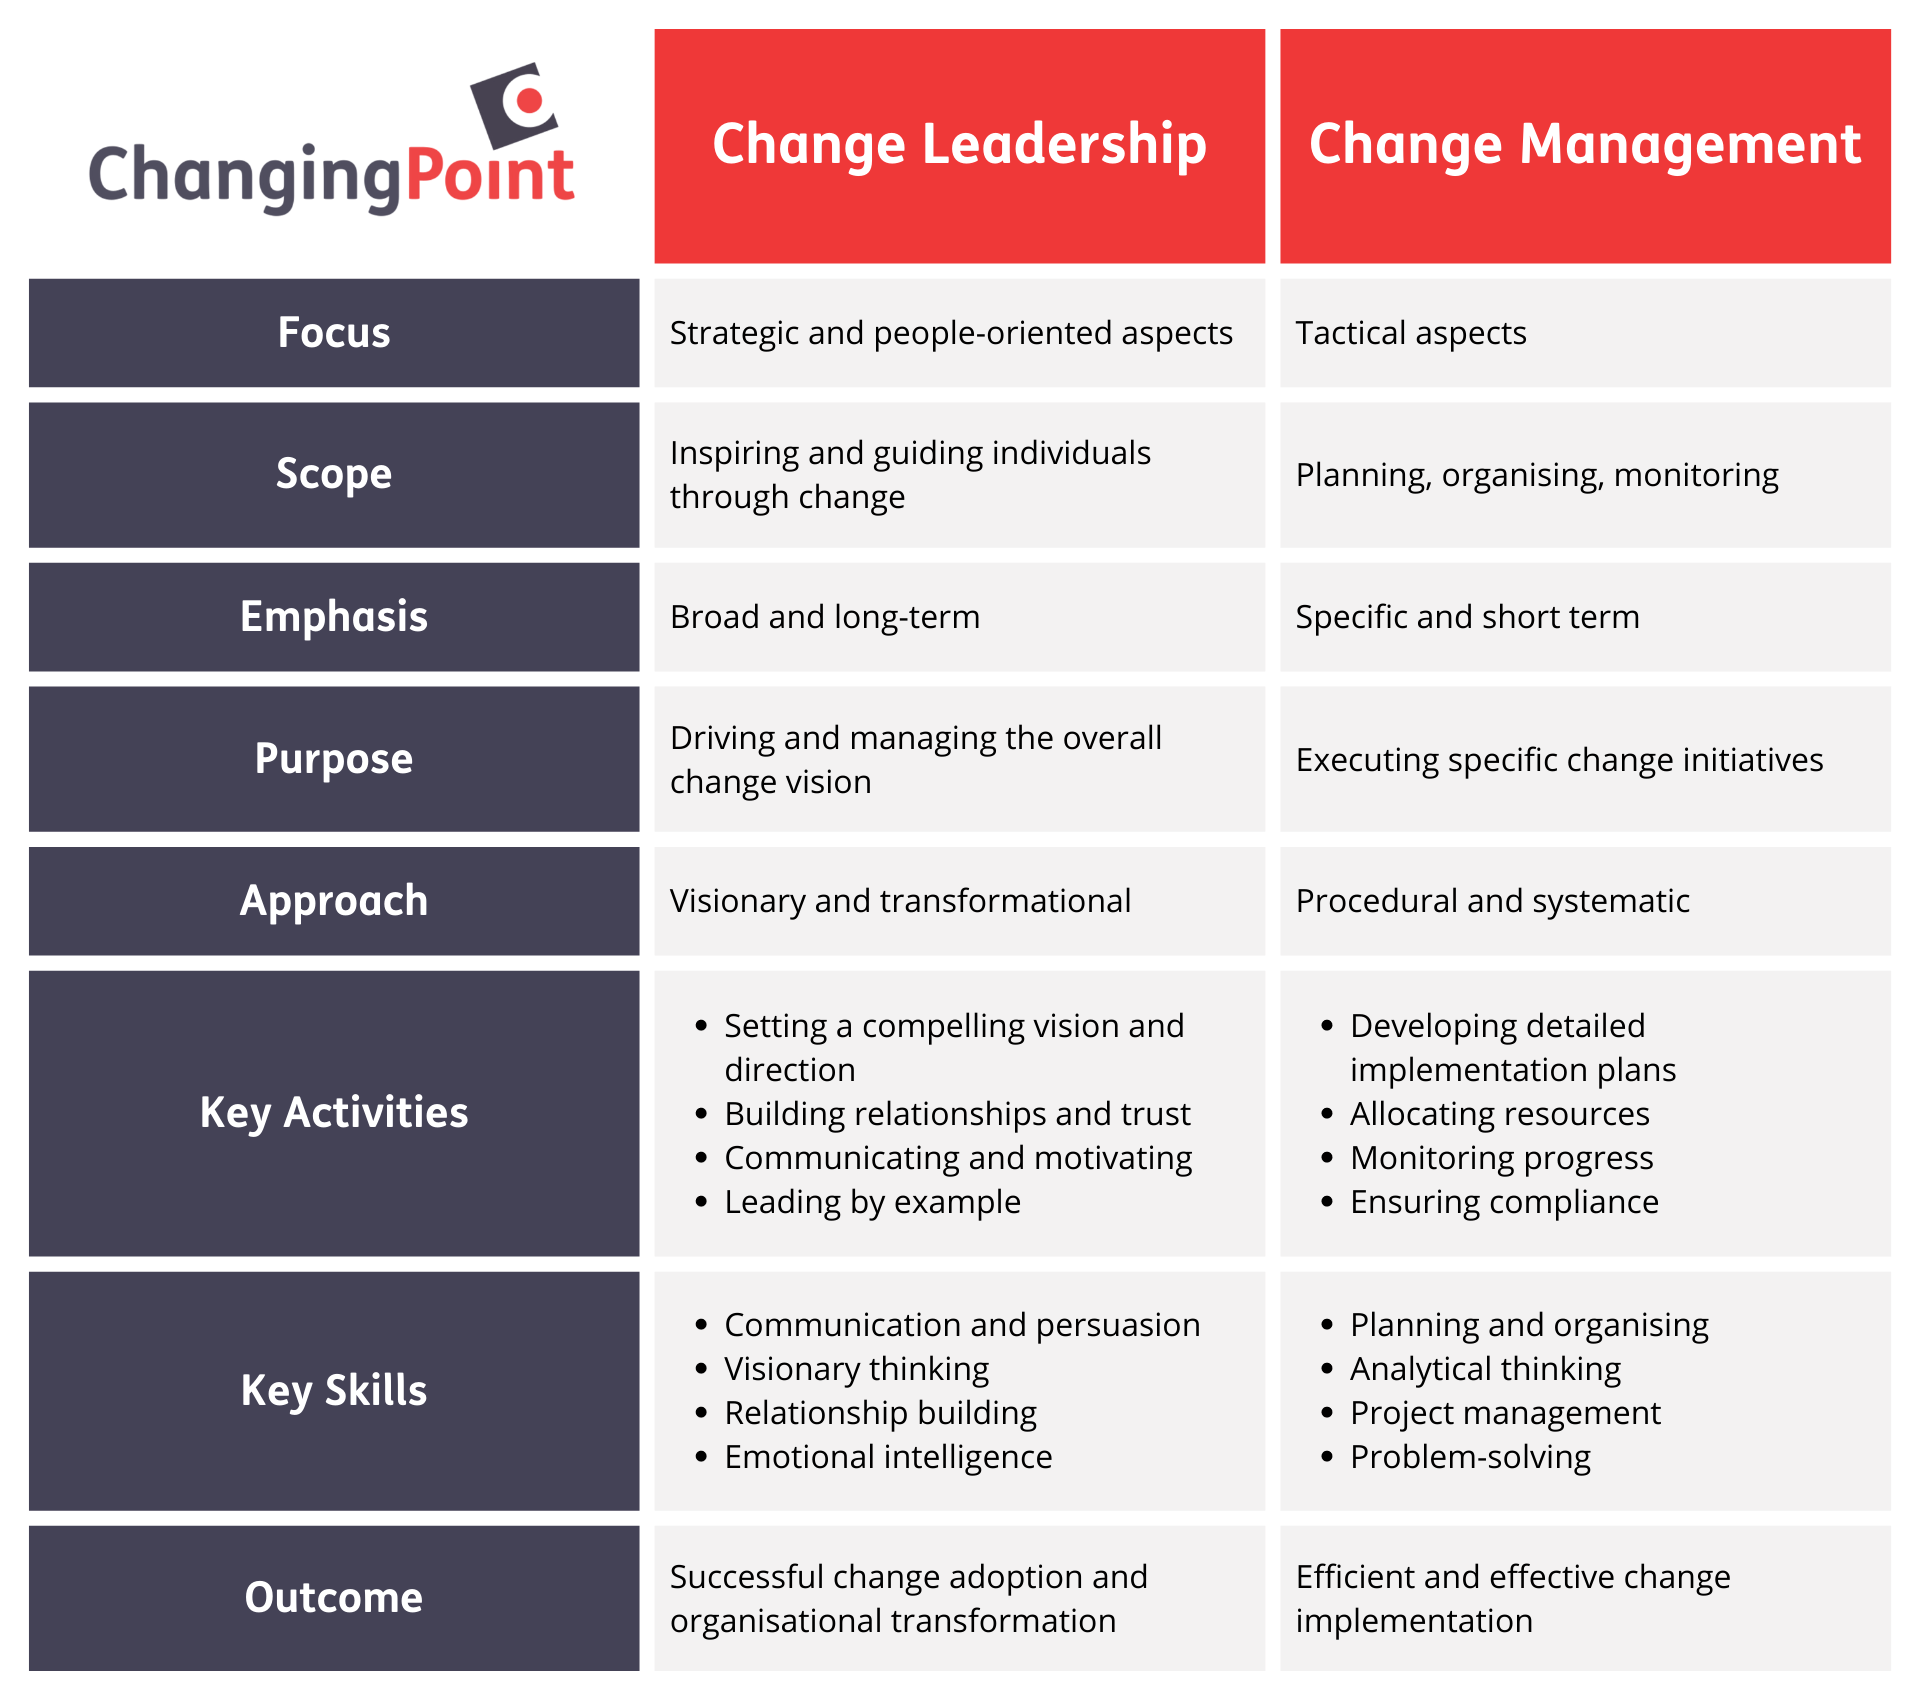 Comparison table of Change Leadership vs Change Management